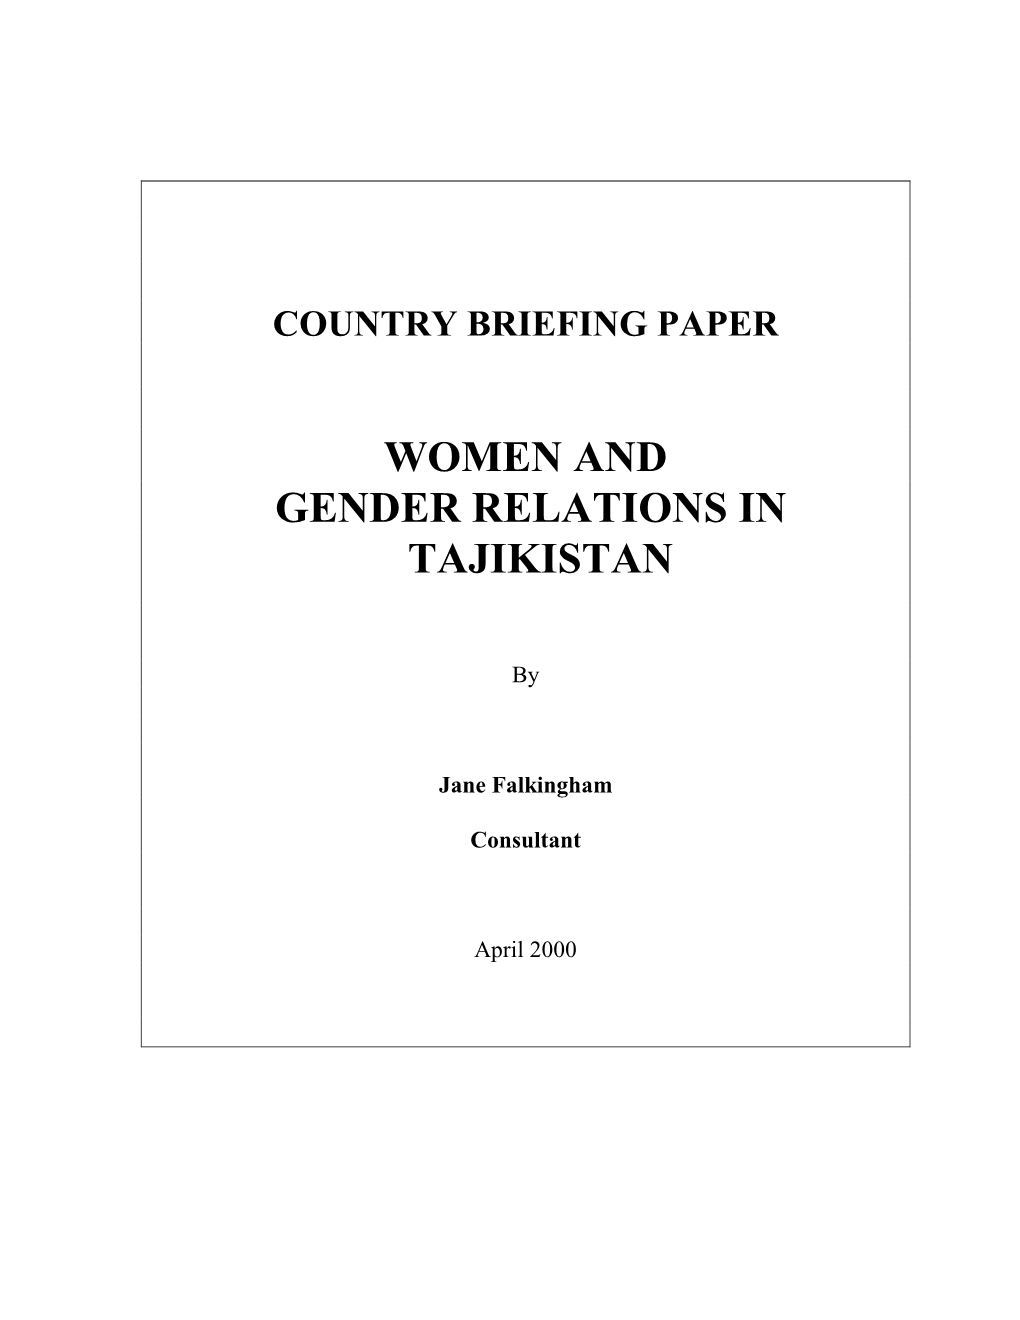 Women and Gender Relations in Tajikistan